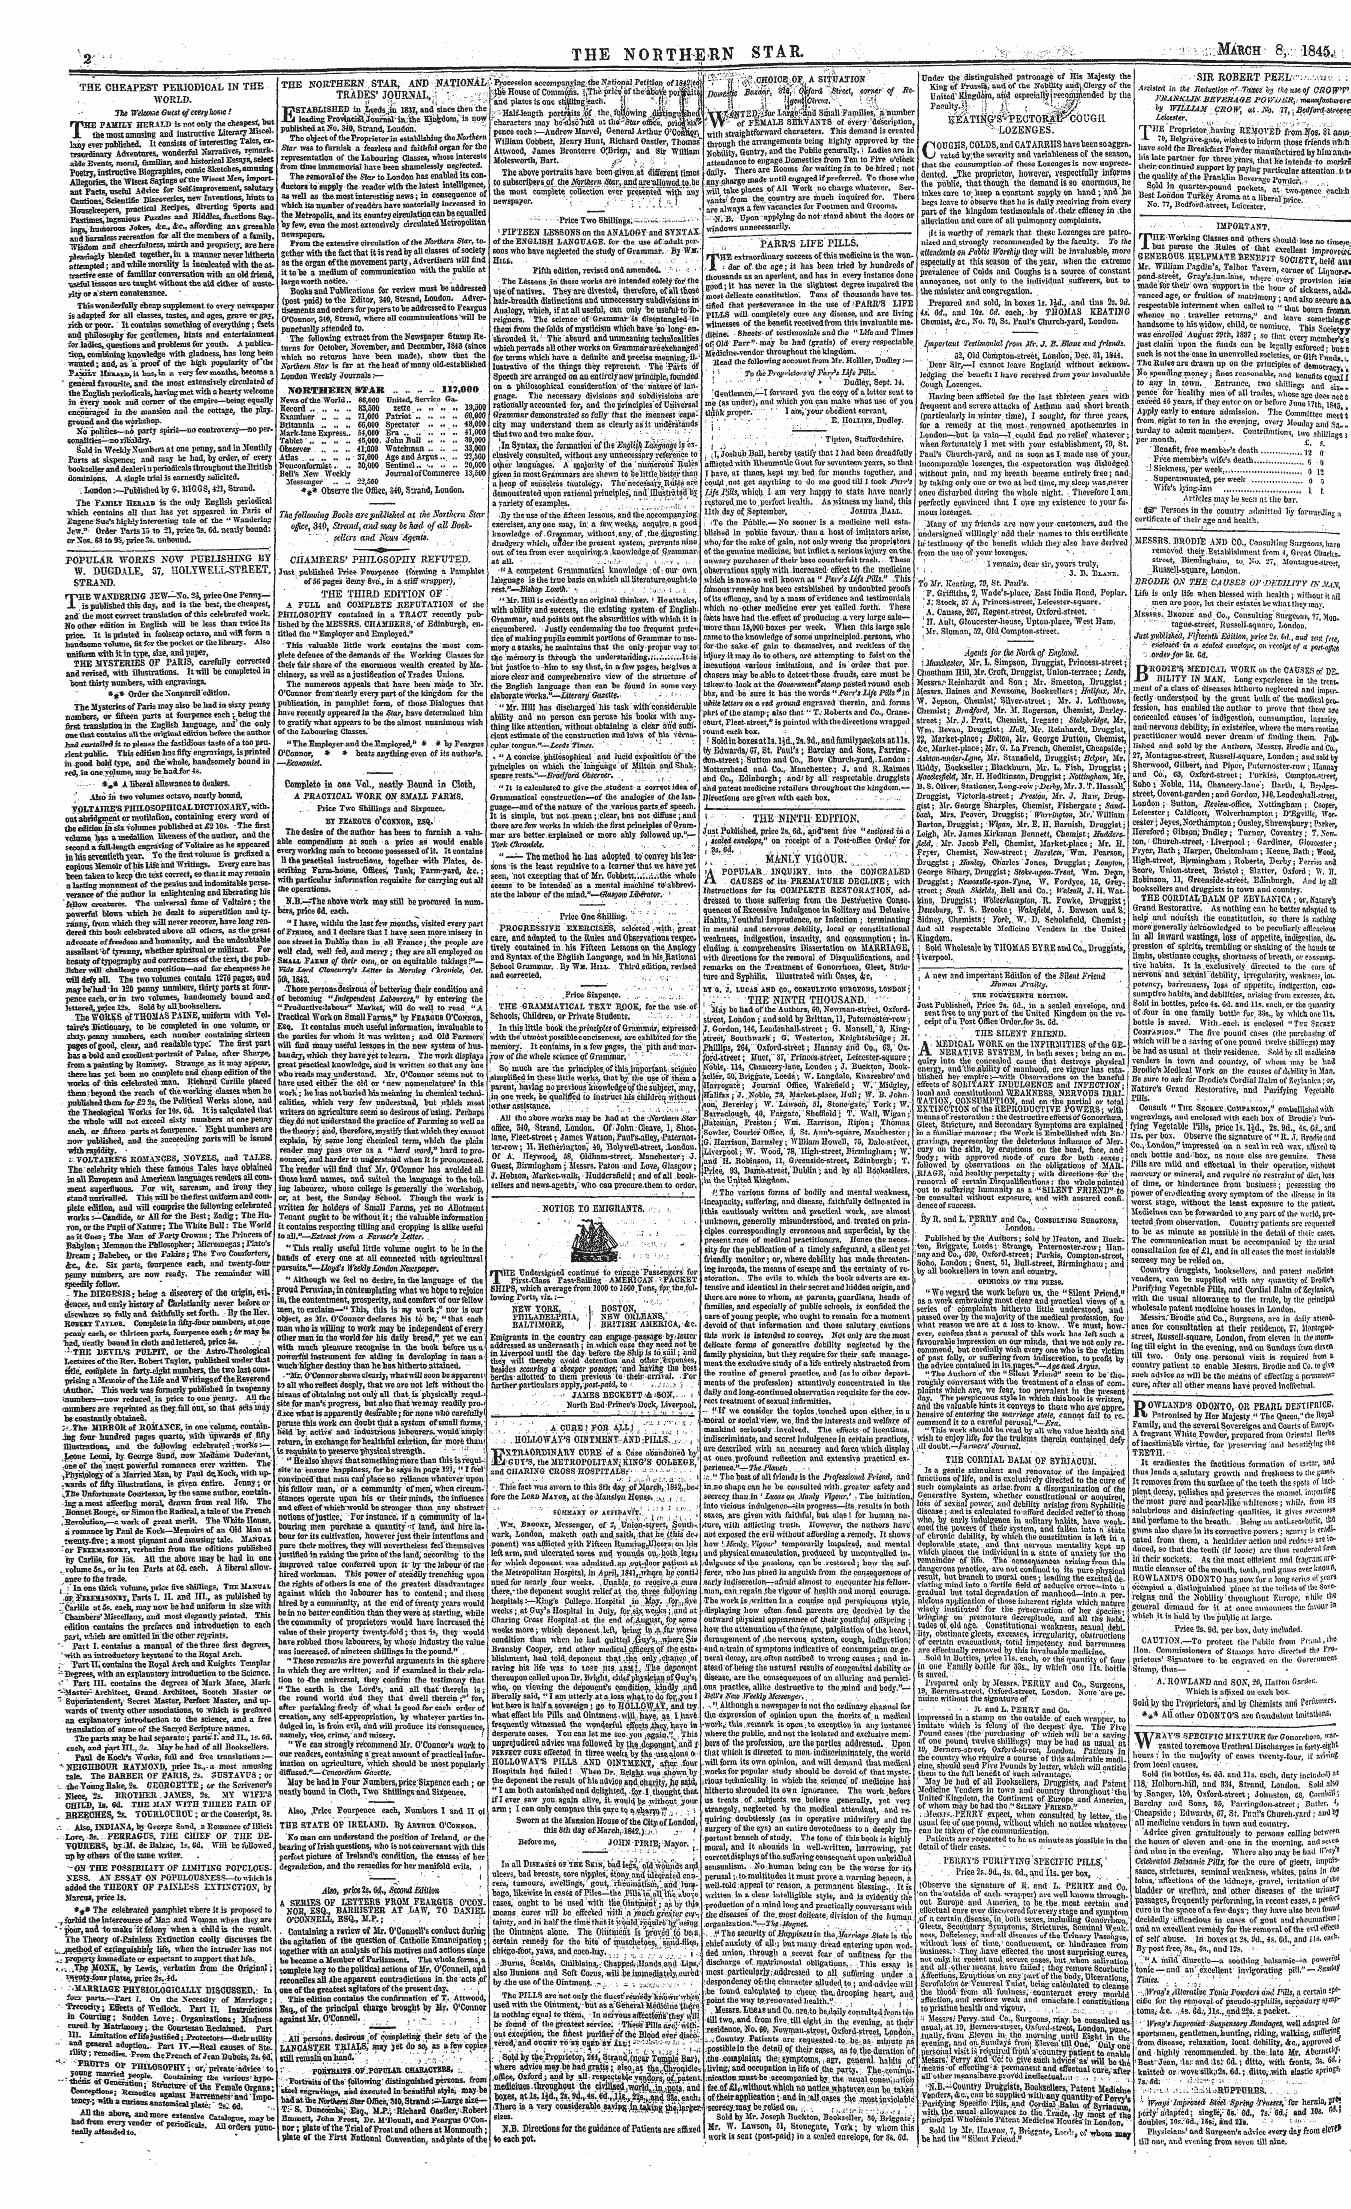 Northern Star (1837-1852): jS F Y, 3rd edition - Ad00204